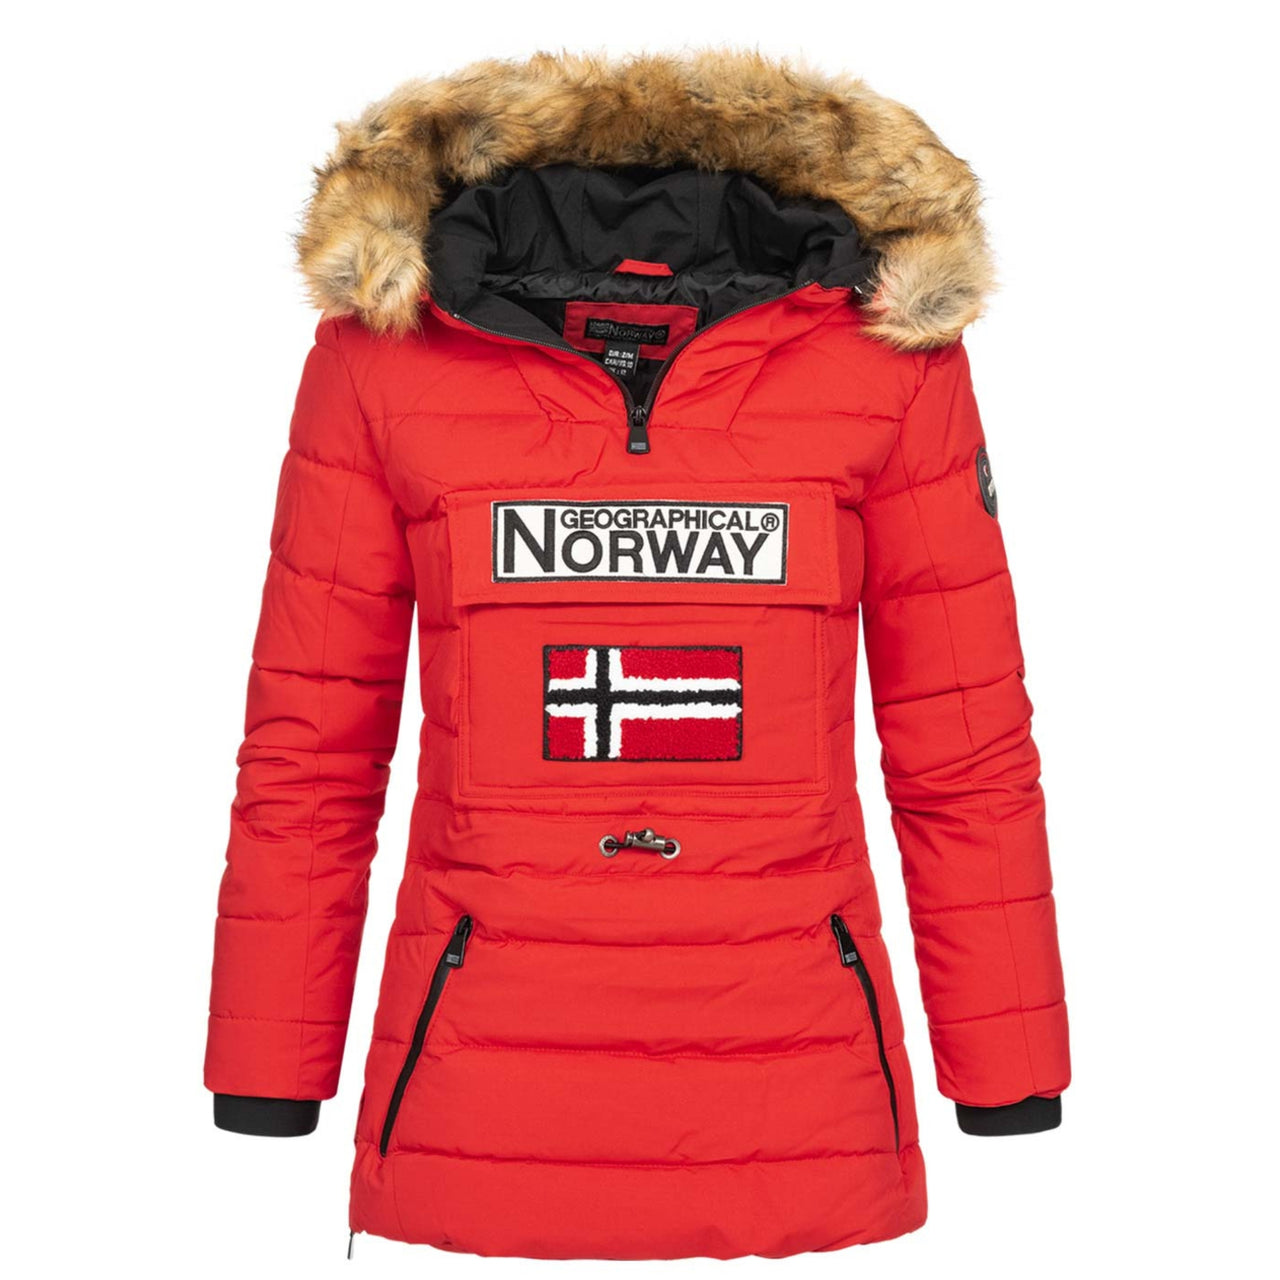 Geographical-Norway  Tu tienda online de ropa invernal